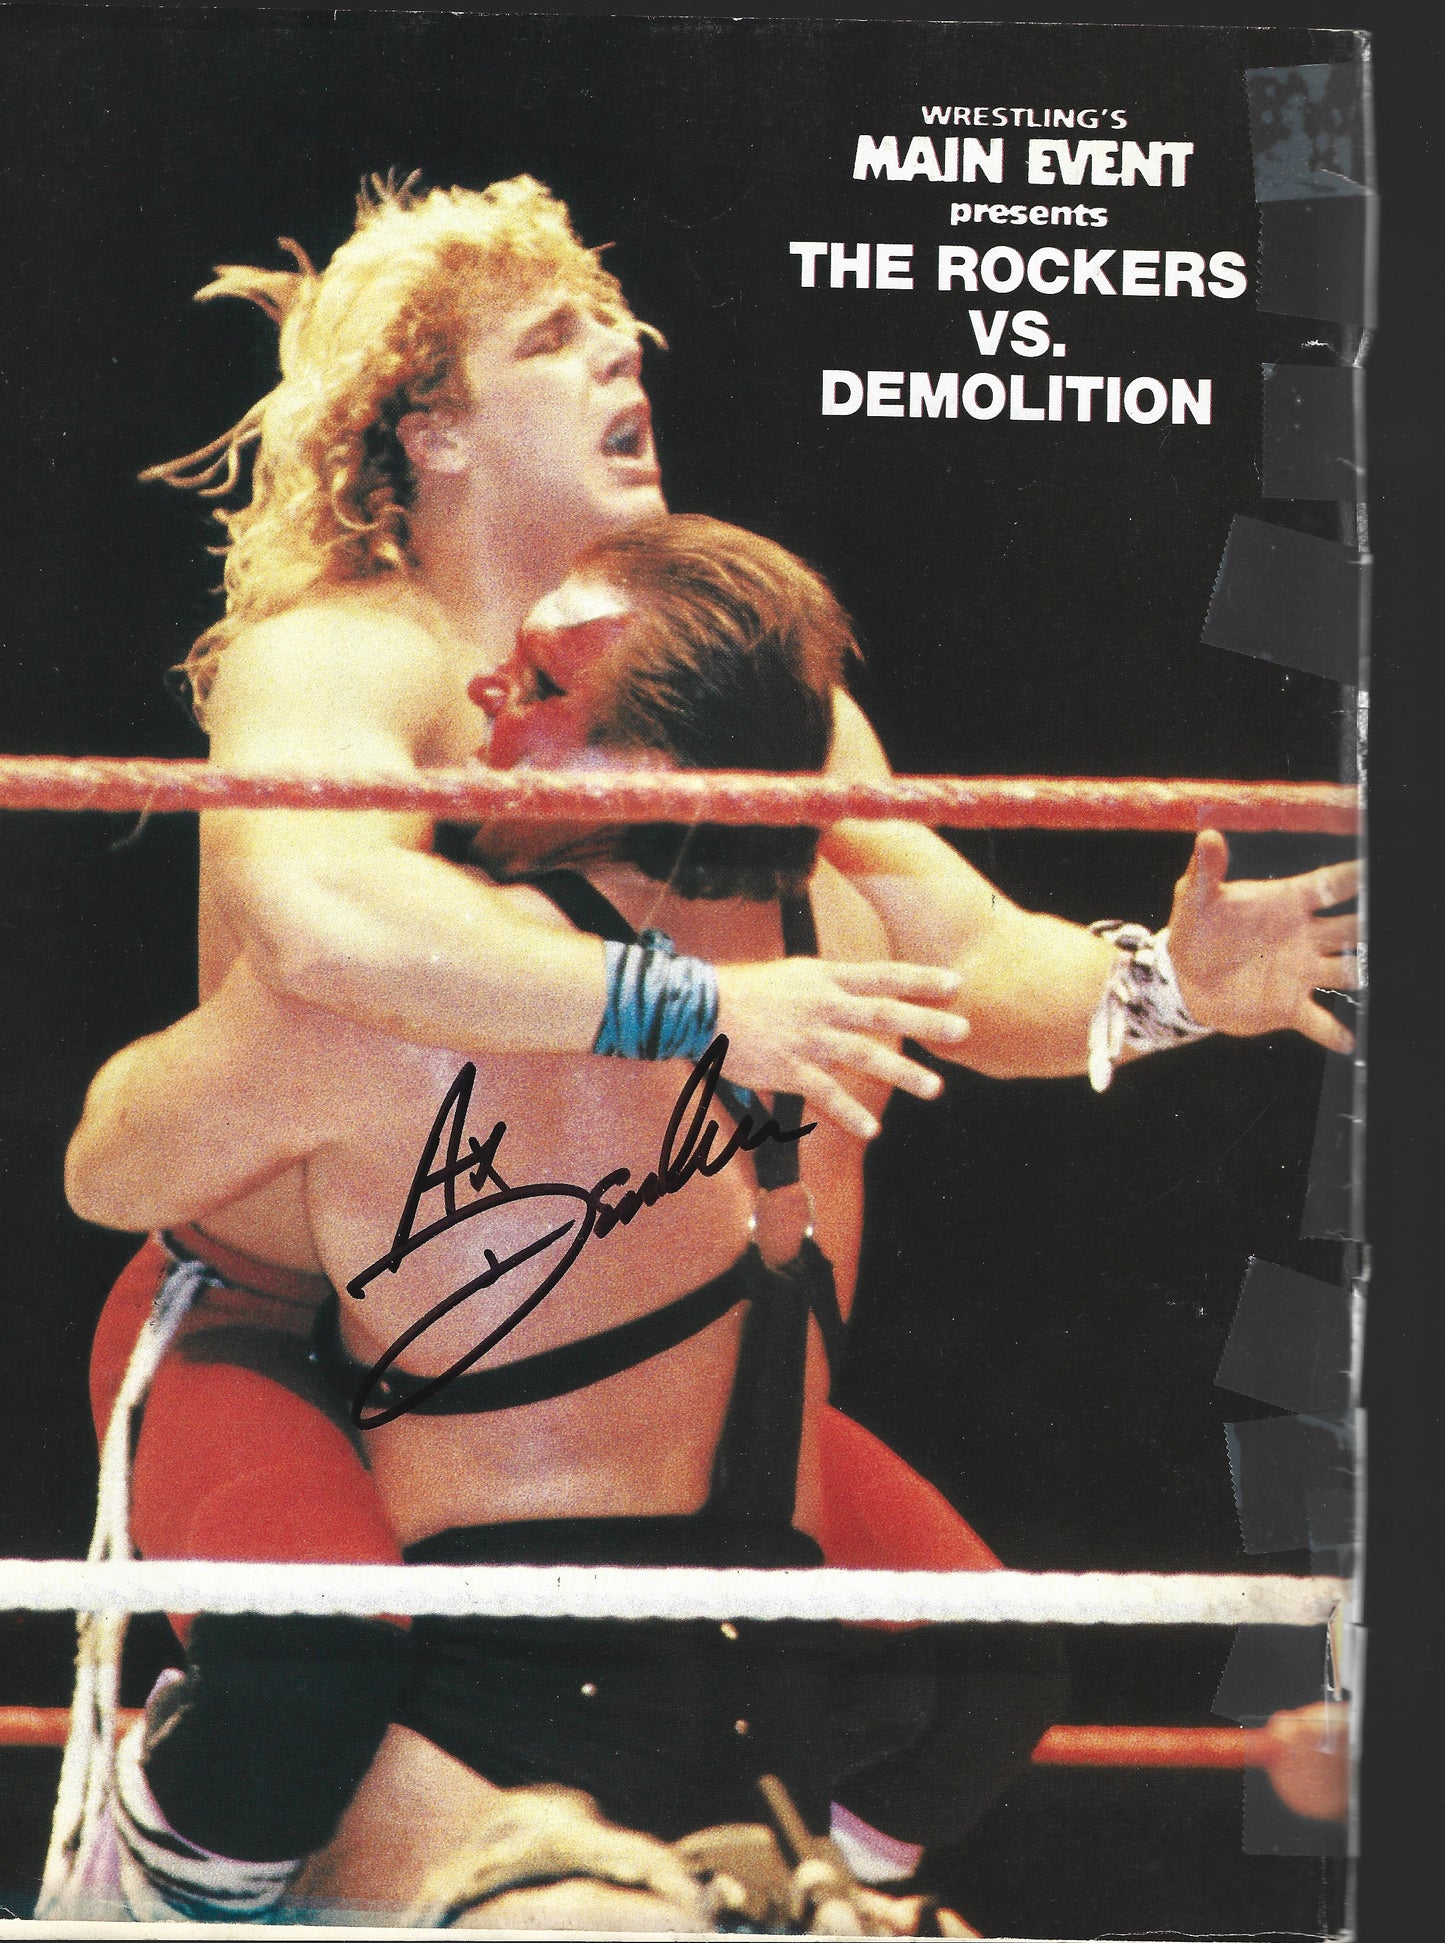 TC2 Sting Larry Zbyszko  Bobby Eaton Jim Cornette , Demolition Ax  Shawn Michaels,  Autographed Vintage Wrestling Magazine w/COA